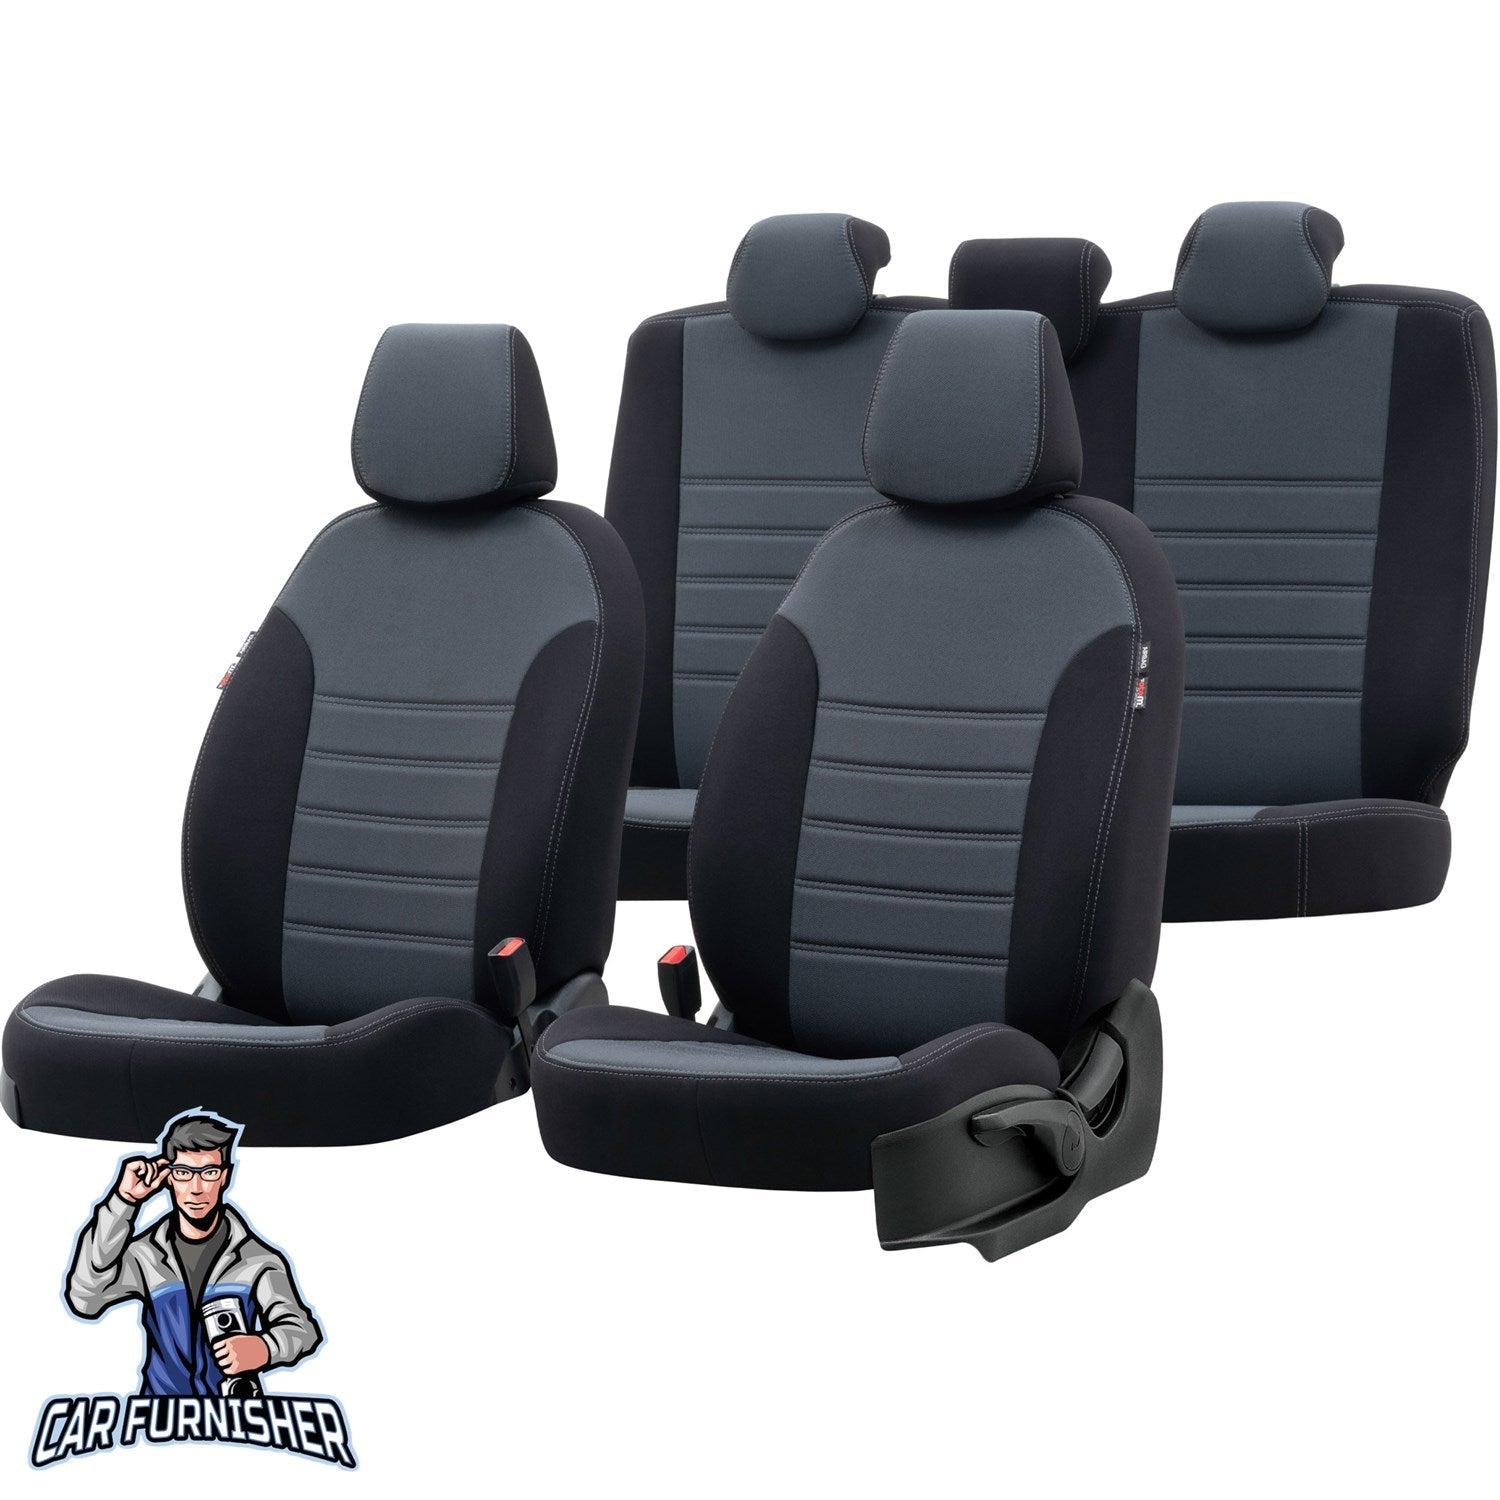 Daihatsu Materia Car Seat Covers 2007-2010 Original Design Smoked Black Full Set (5 Seats + Handrest) Fabric